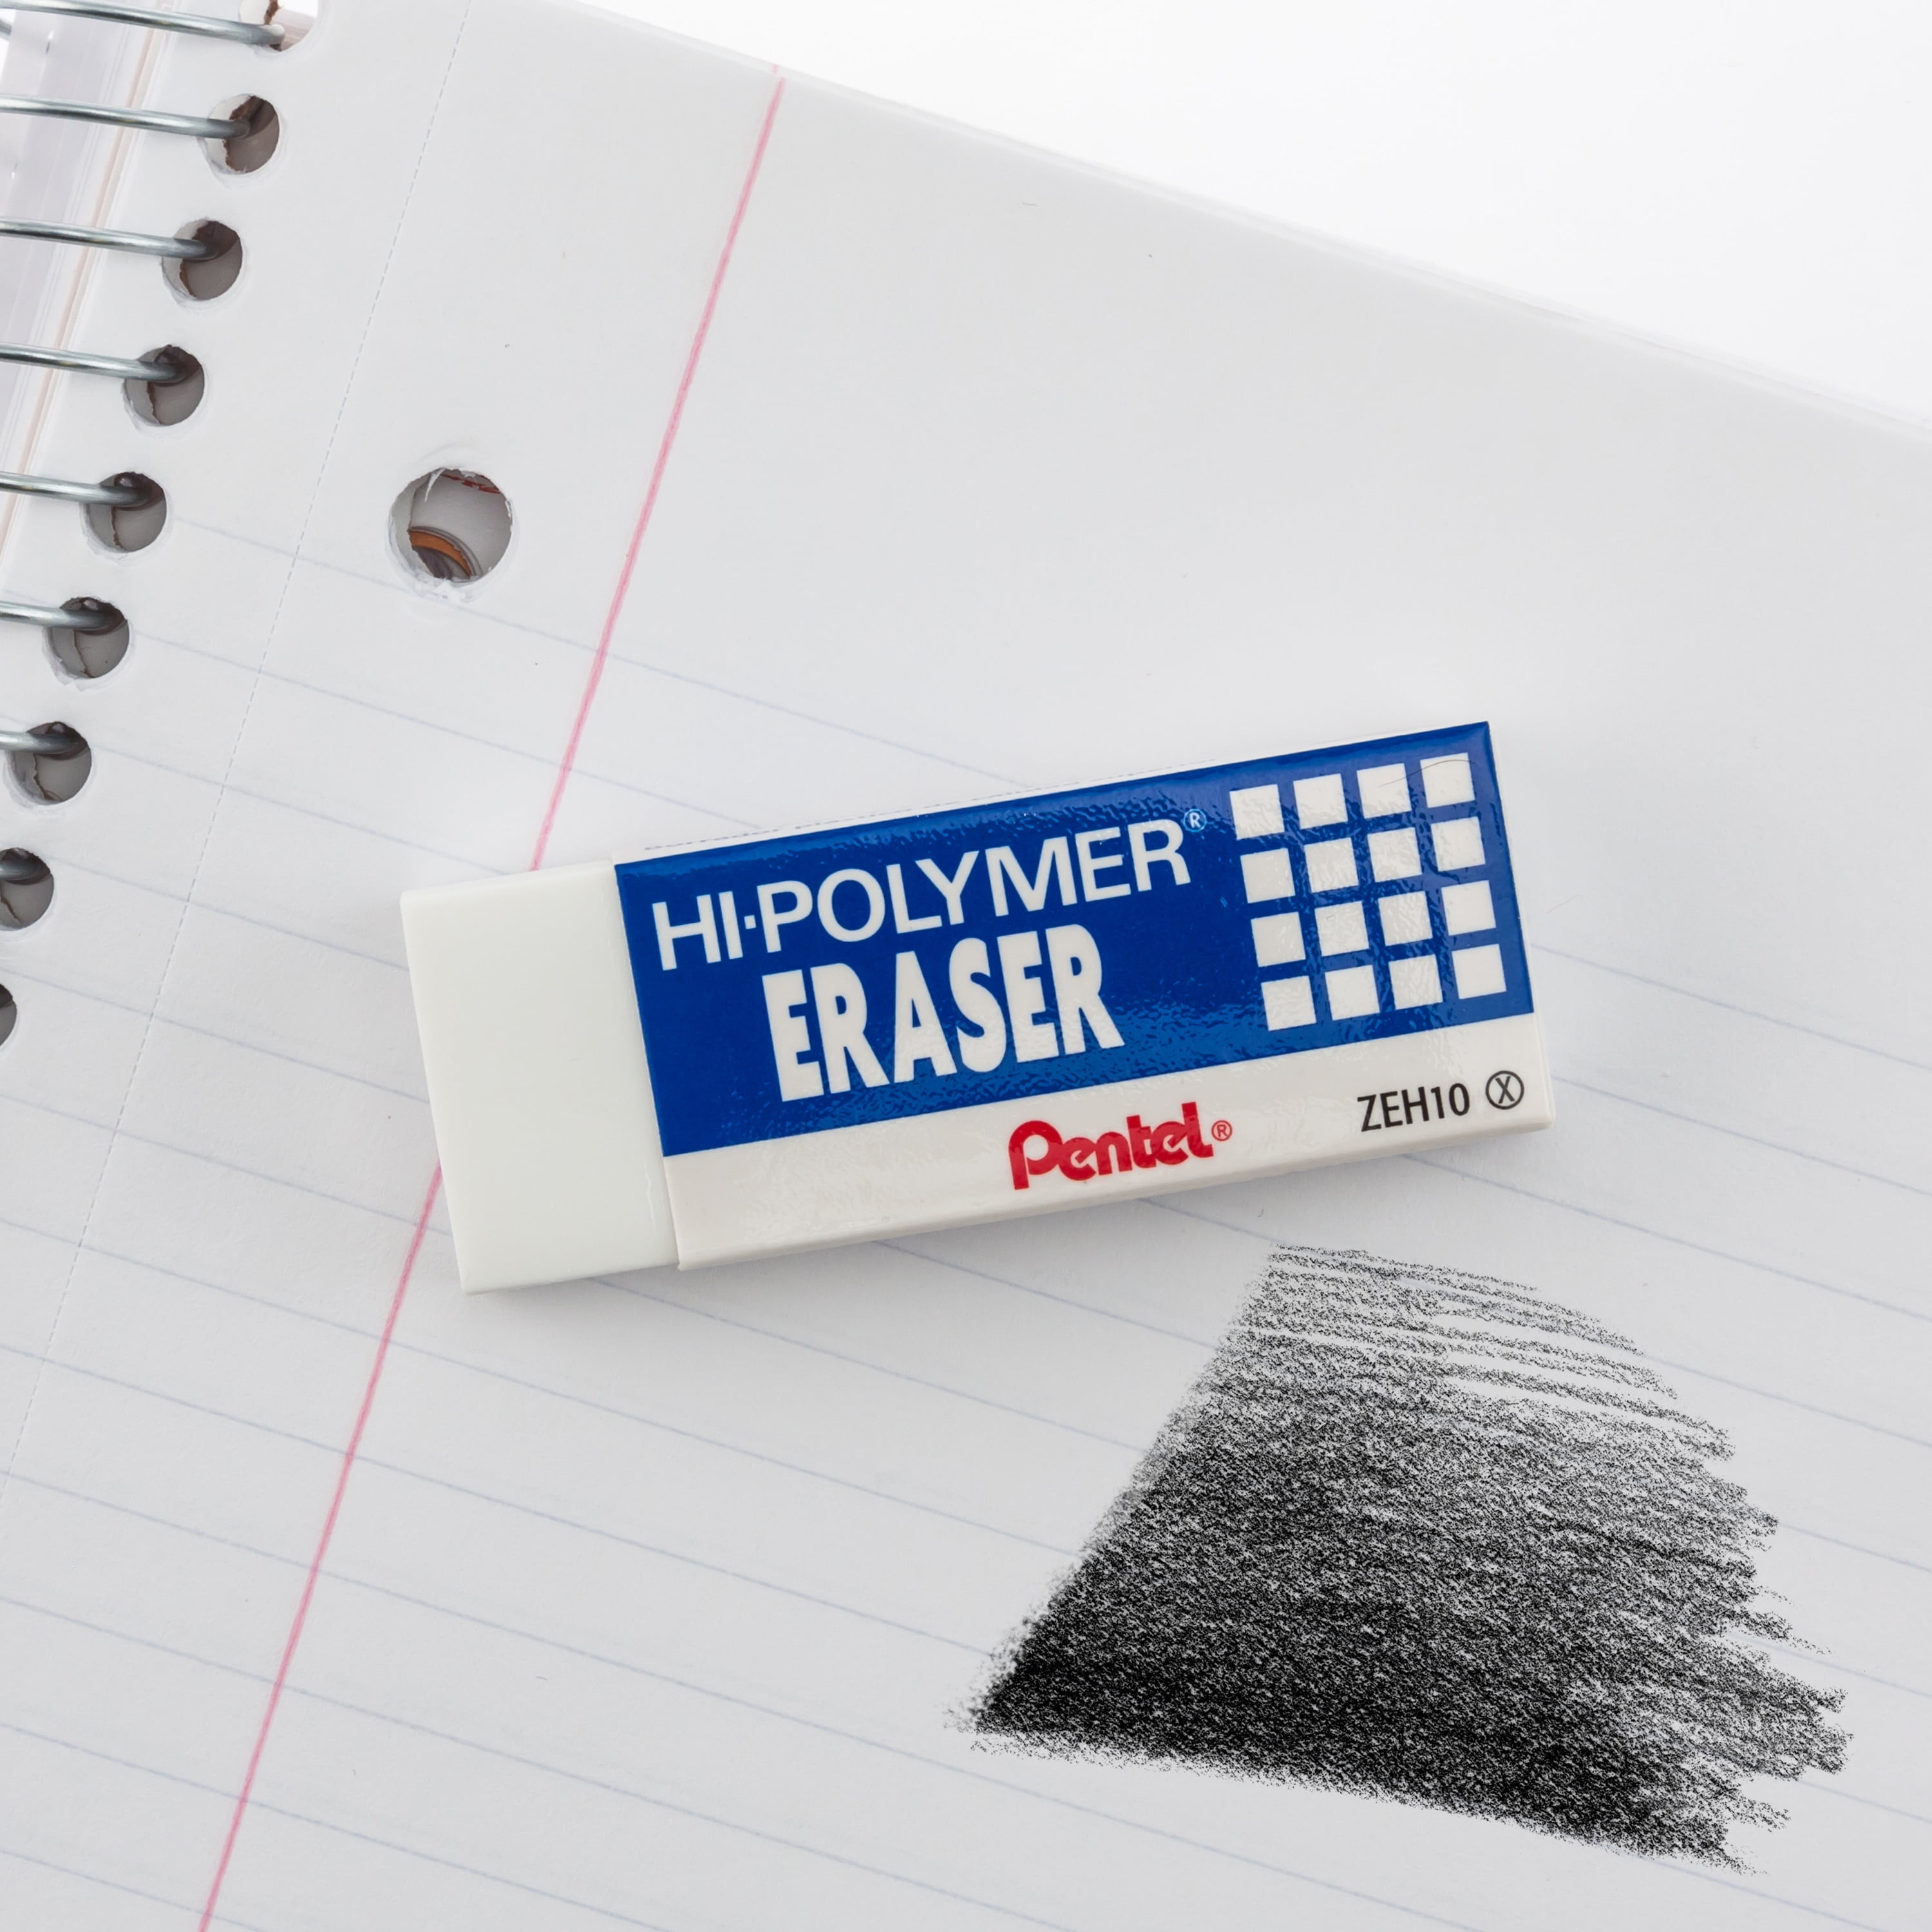 White Eraser Used Isolate On White Stock Photo 783990223